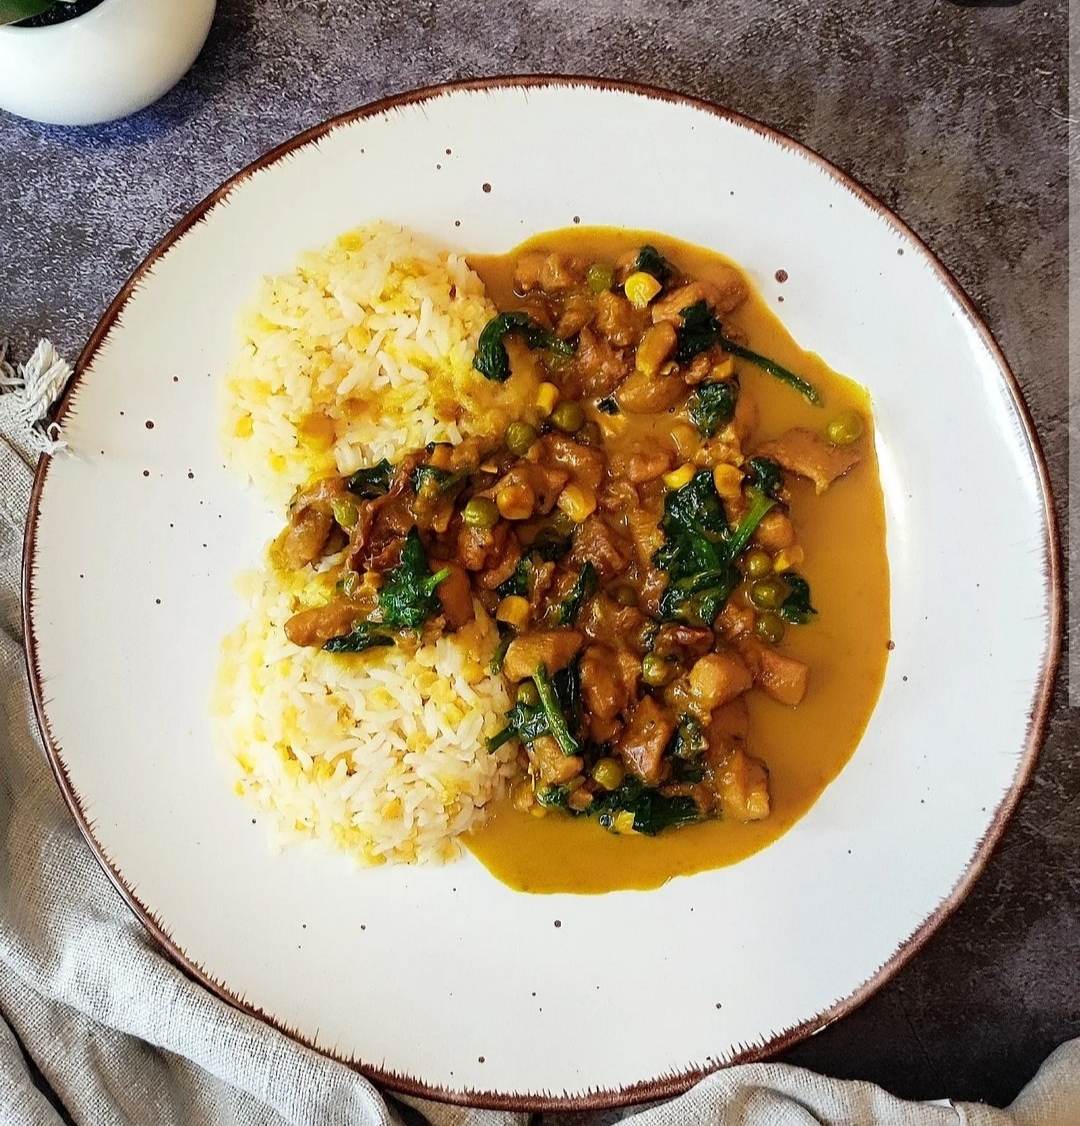 Volite curry? Donosimo recept s malim "twistom" koji će vas oduševiti!